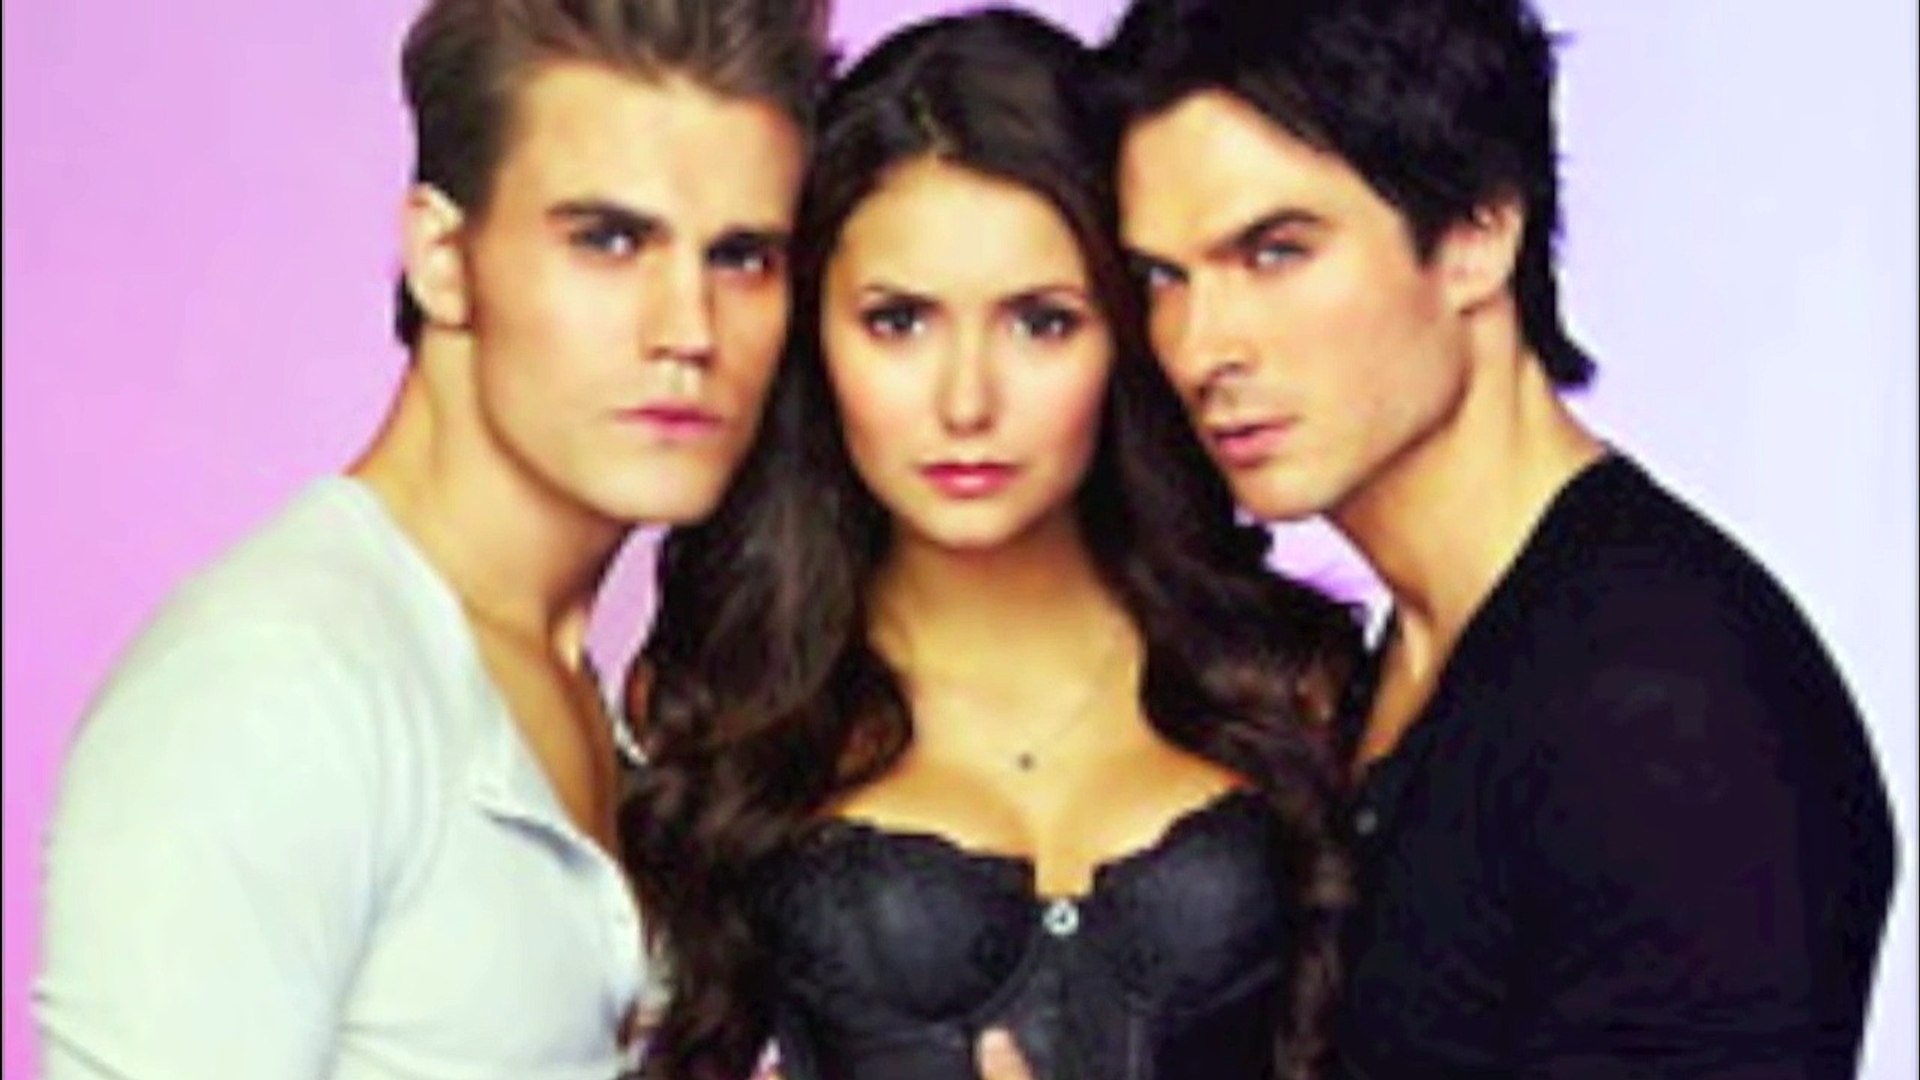 Damon & Elena First Kiss - The Vampire Diaries 3:19.mov VO.STFR